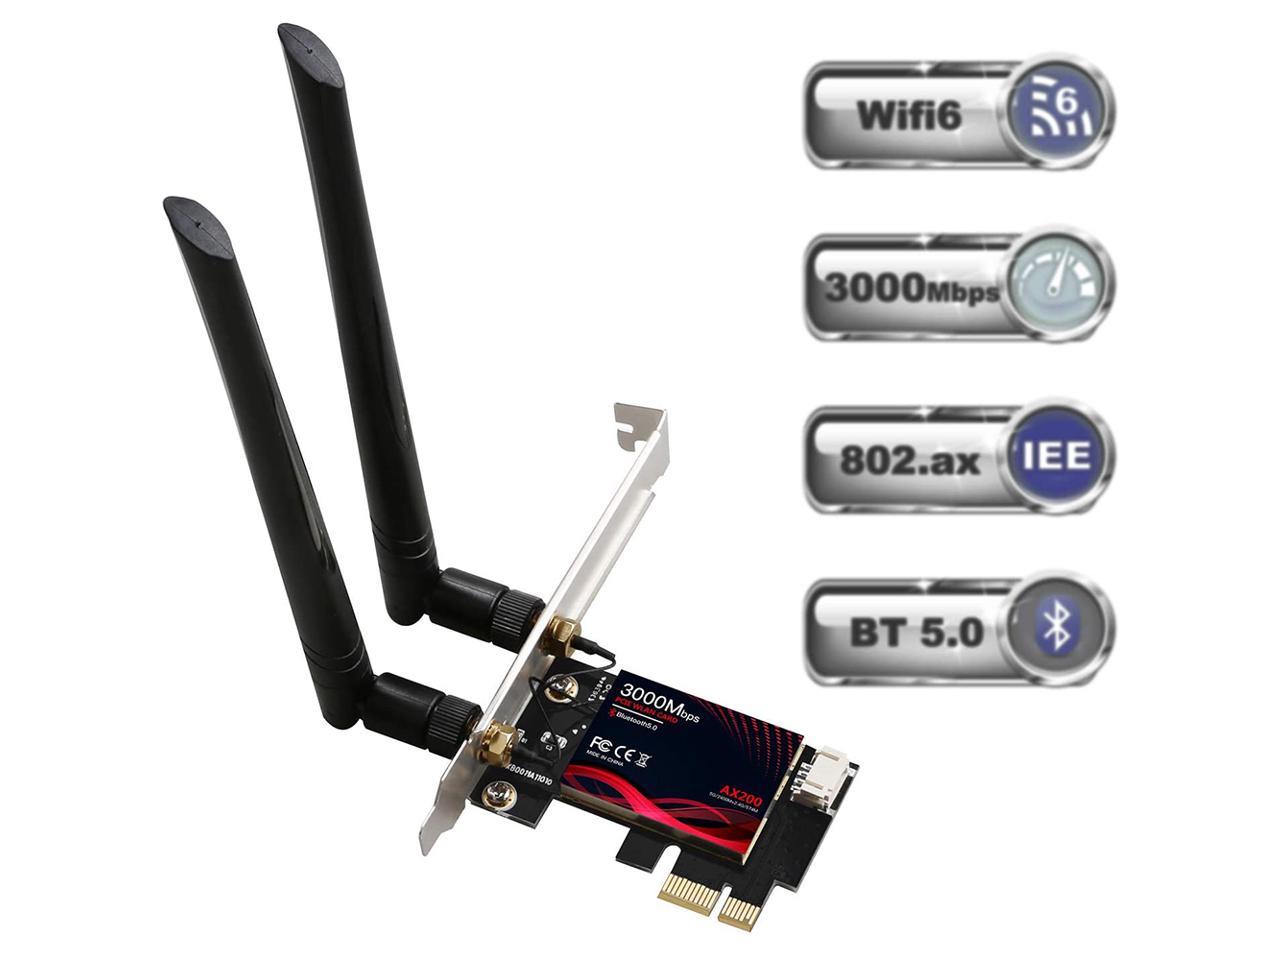 WiFi 6 PCIe WiFi Card 3000Mbps Bluetooth 5.0 | 802.11AX | Intel AX200